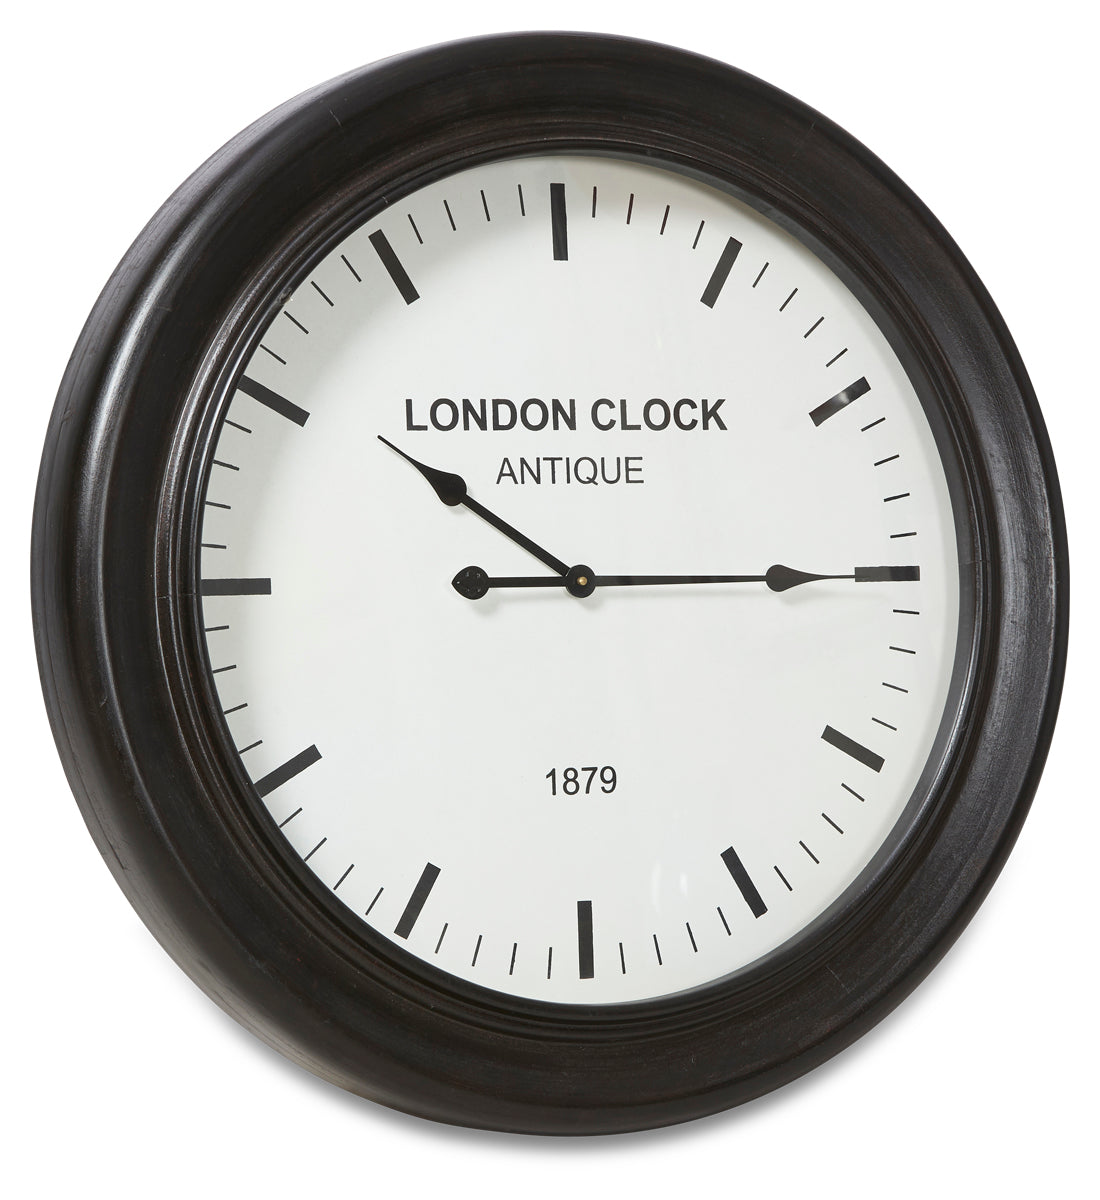 London Classic Wooden Wall Clock - Black